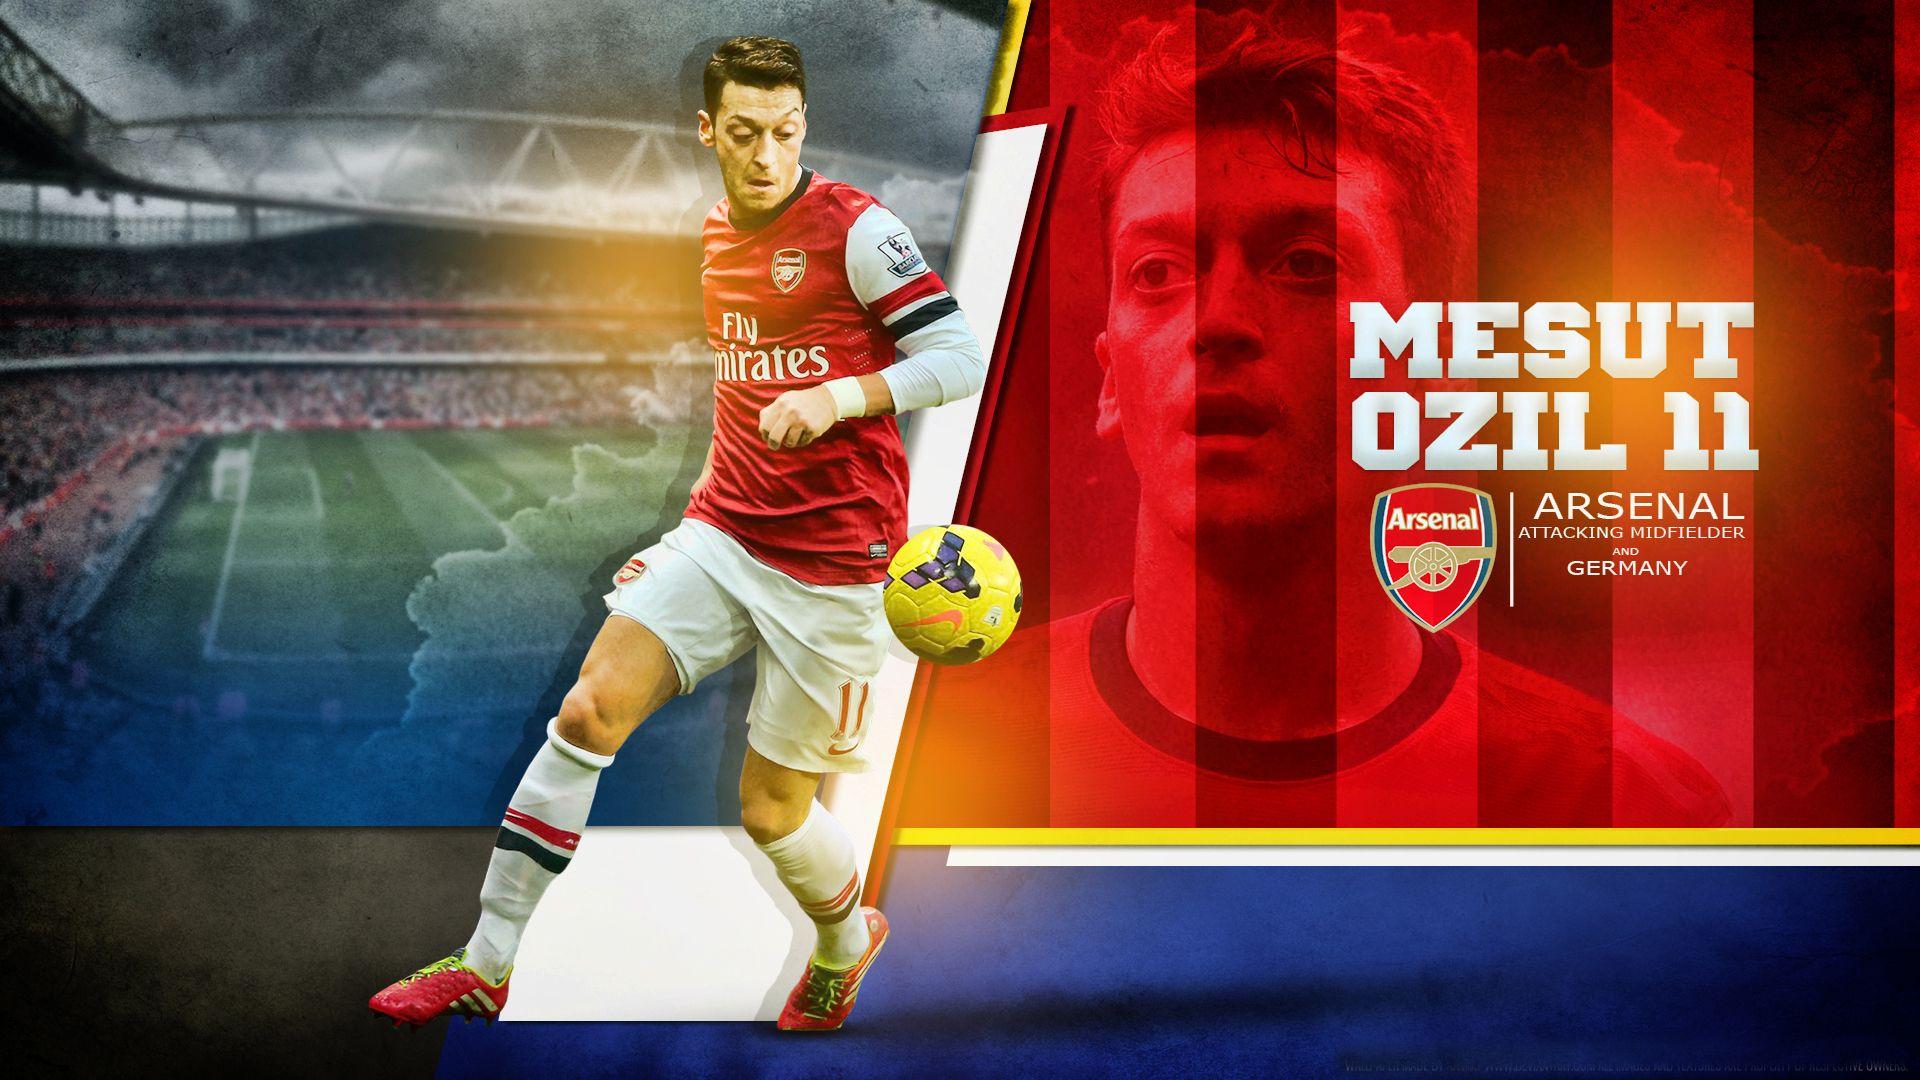 Mesut Ozil Arsenal HD Wallpaper, Image & Picture